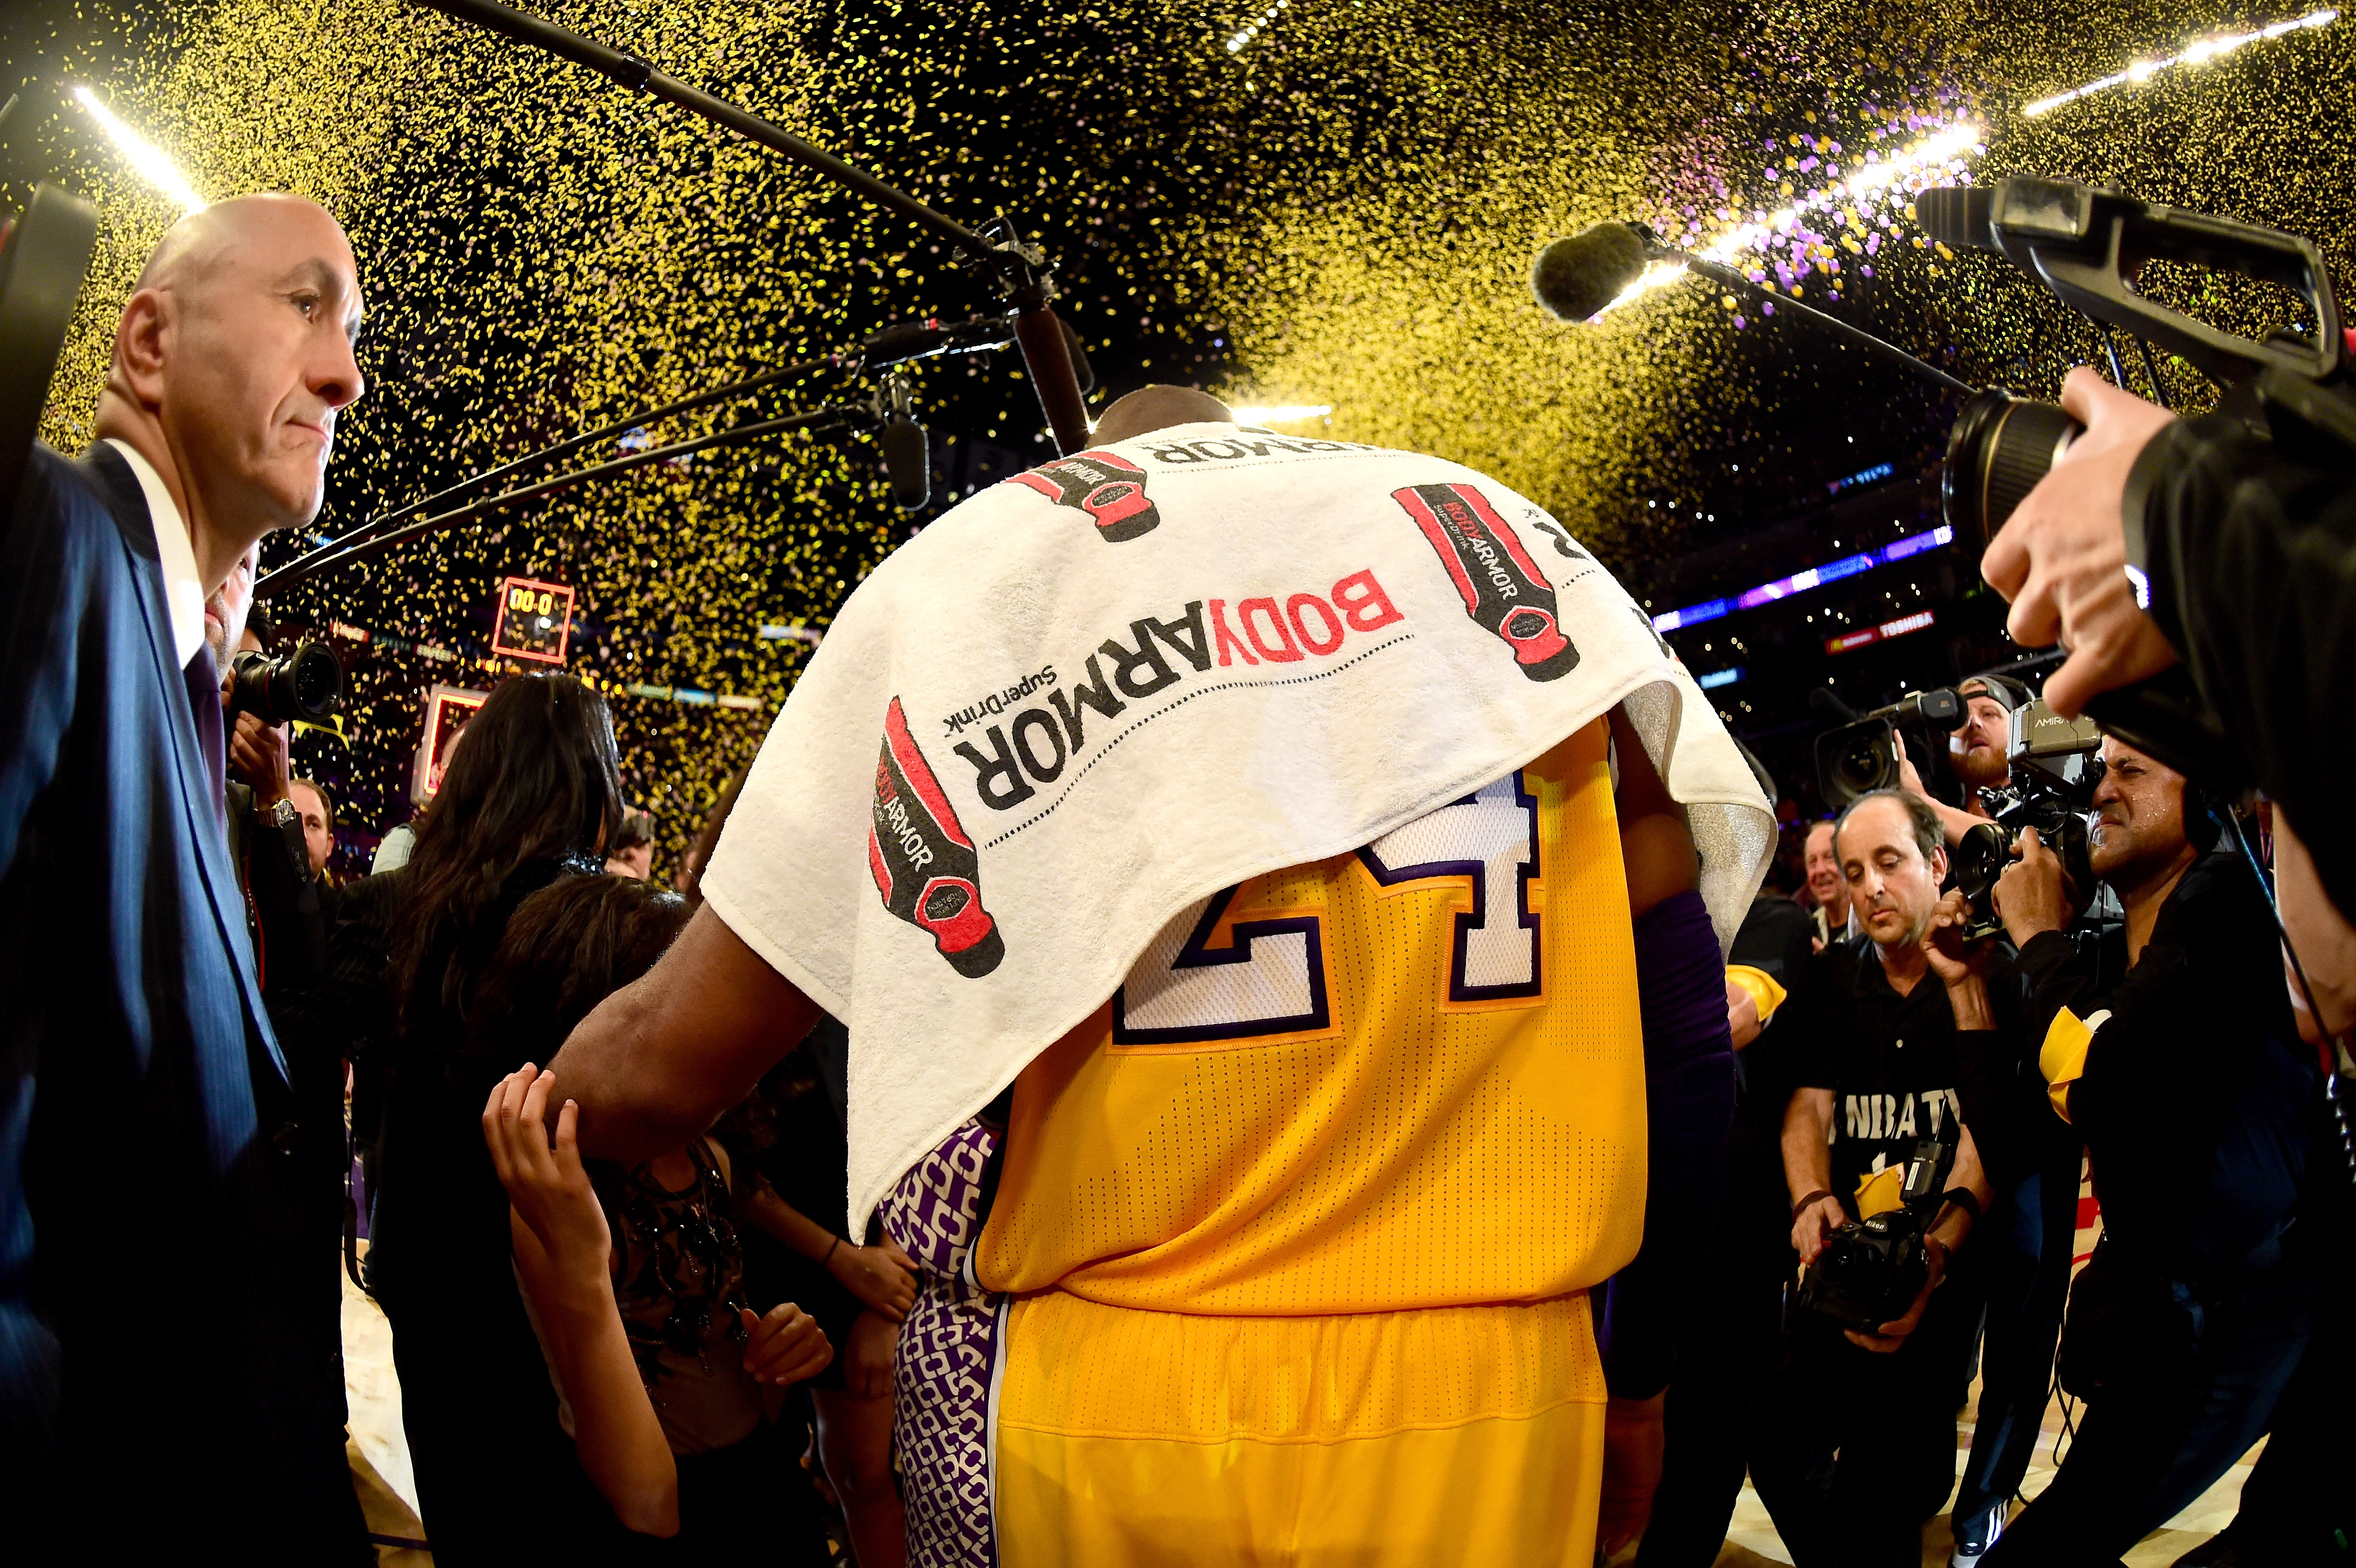 How Kobe Bryant inspired a progressive new Lakers look